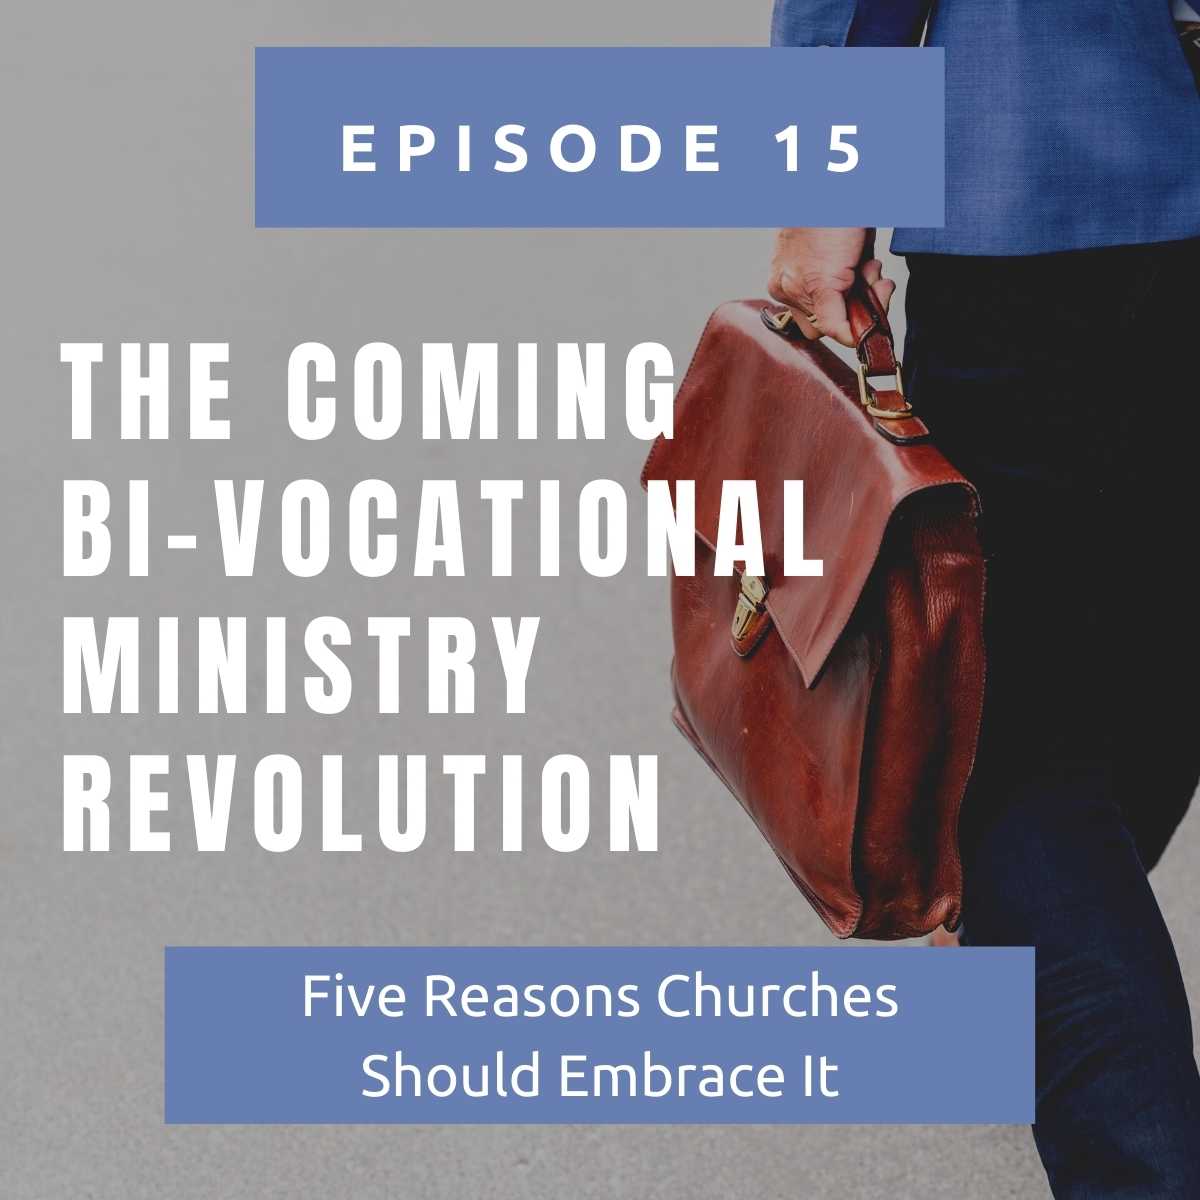 Five Reasons Churches Should Embrace Bi Vocational Ministry Revolution